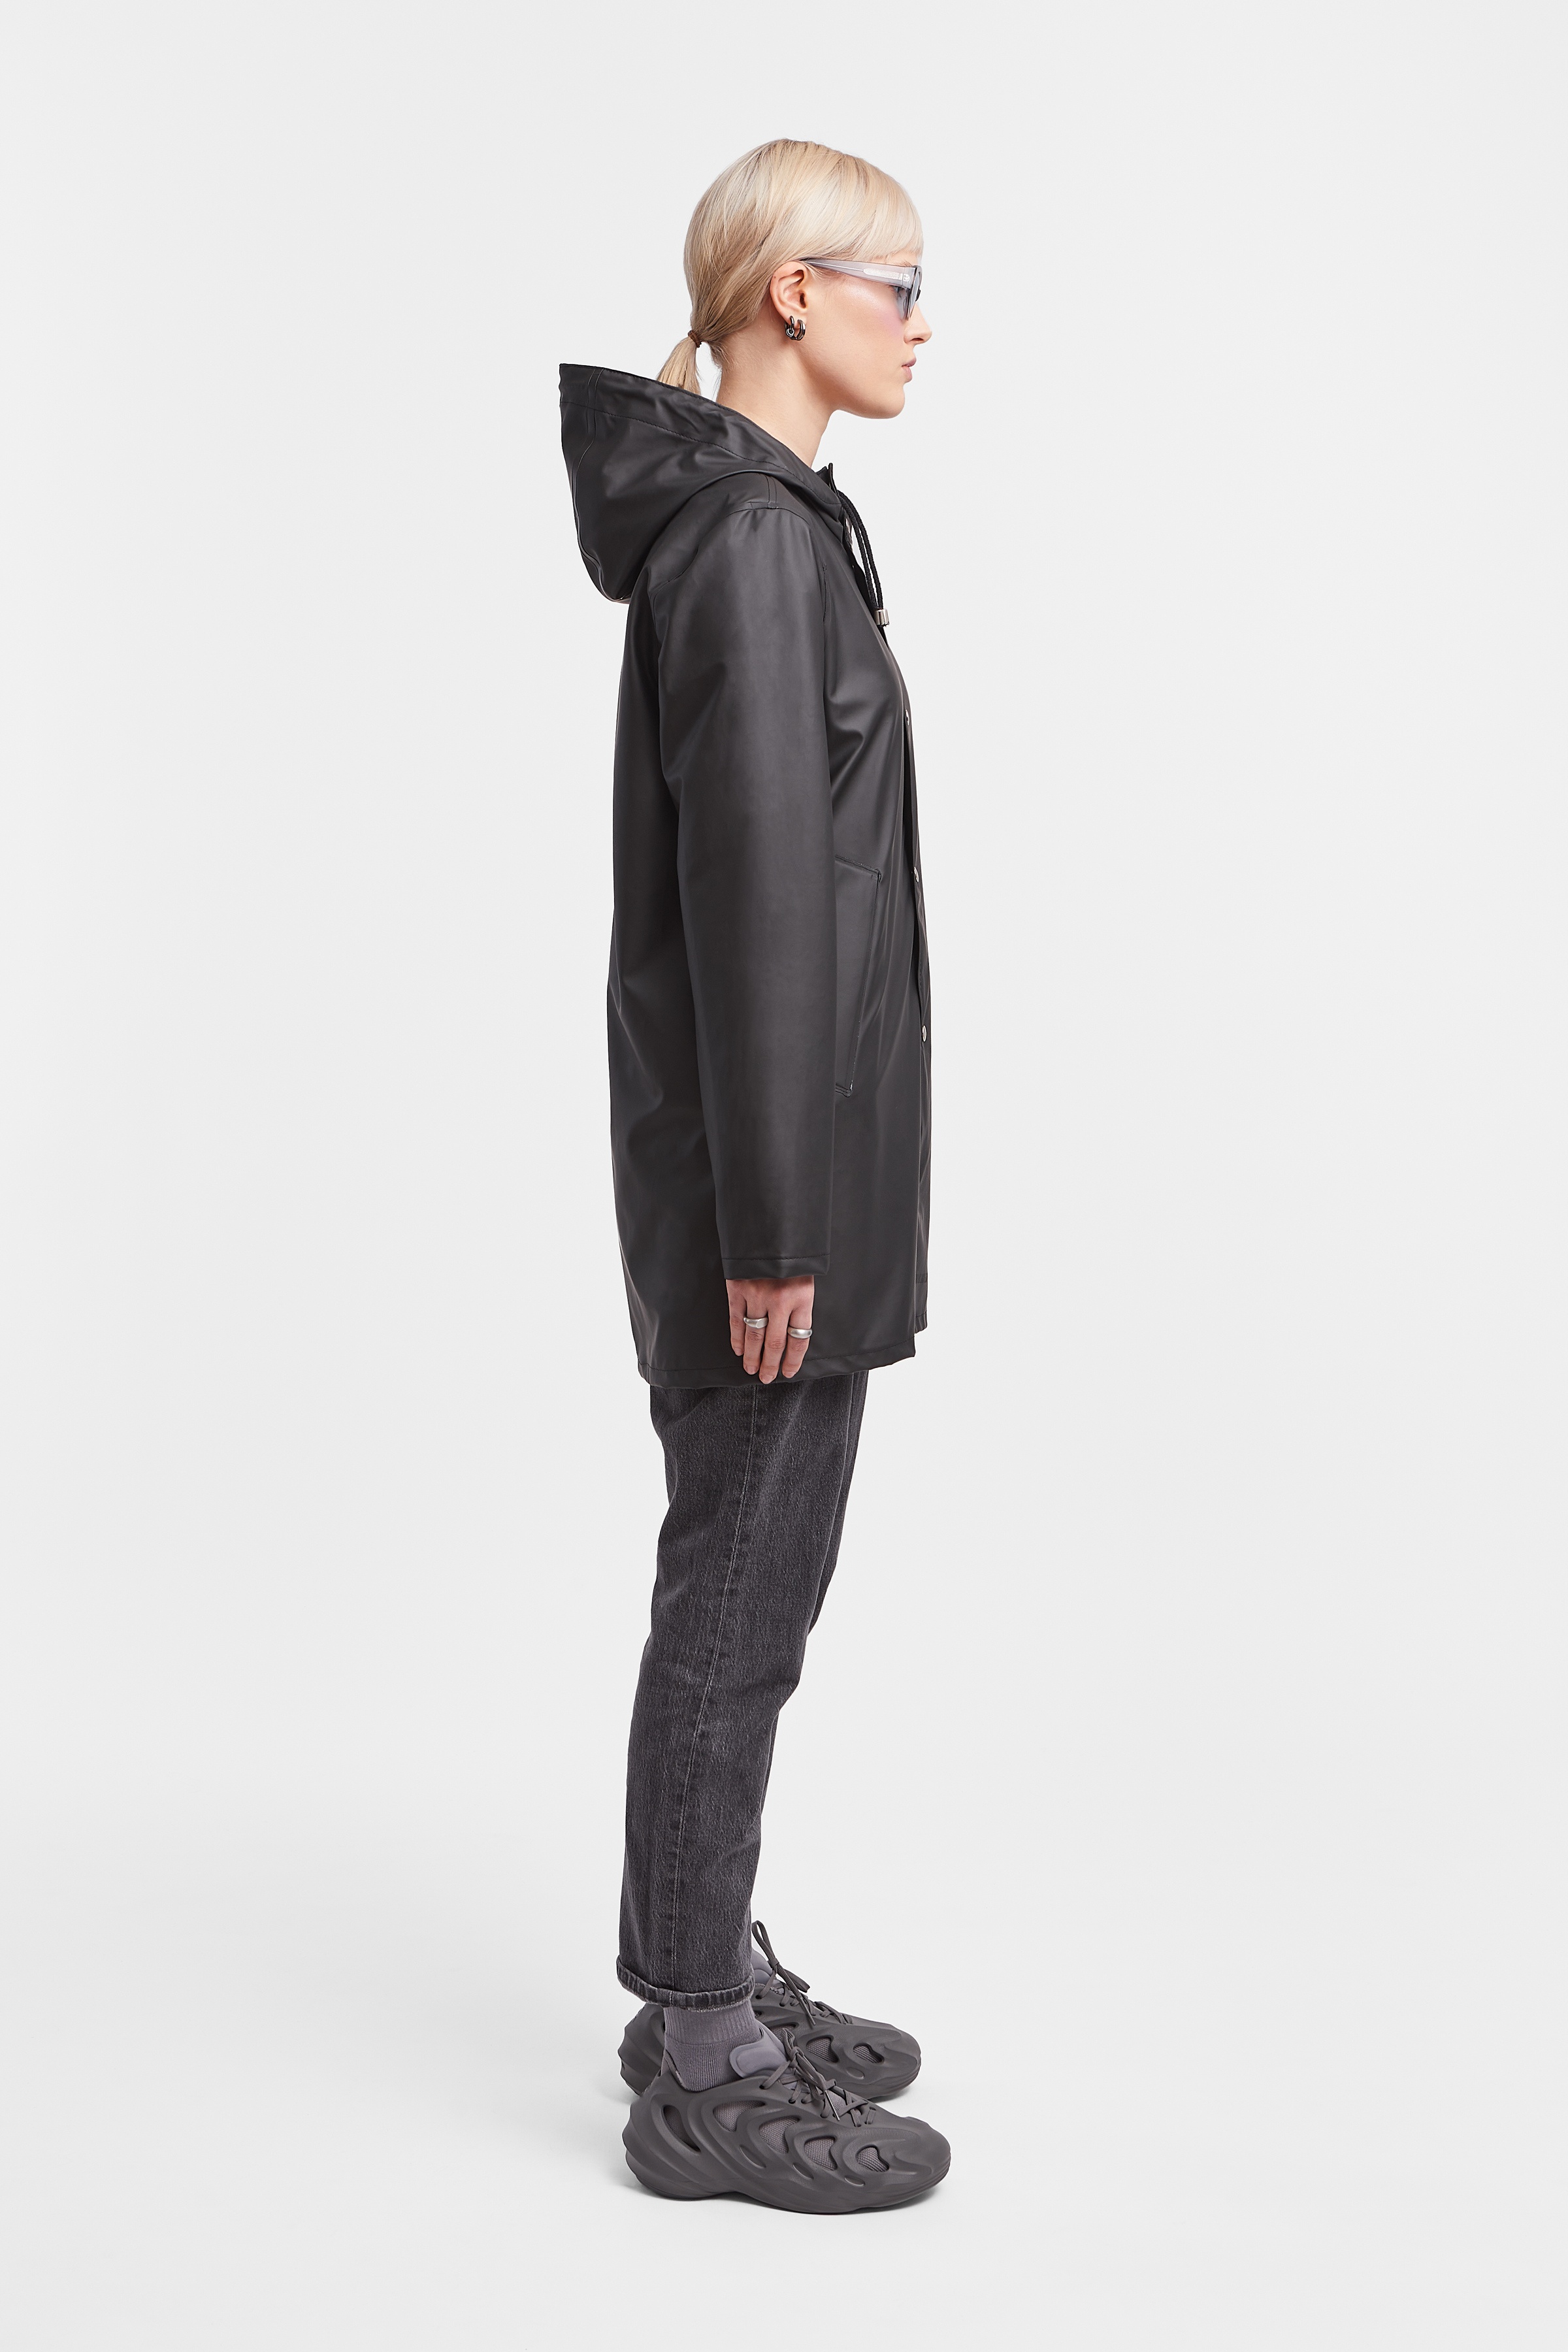 Stockholm Lightweight Raincoat Black - 3